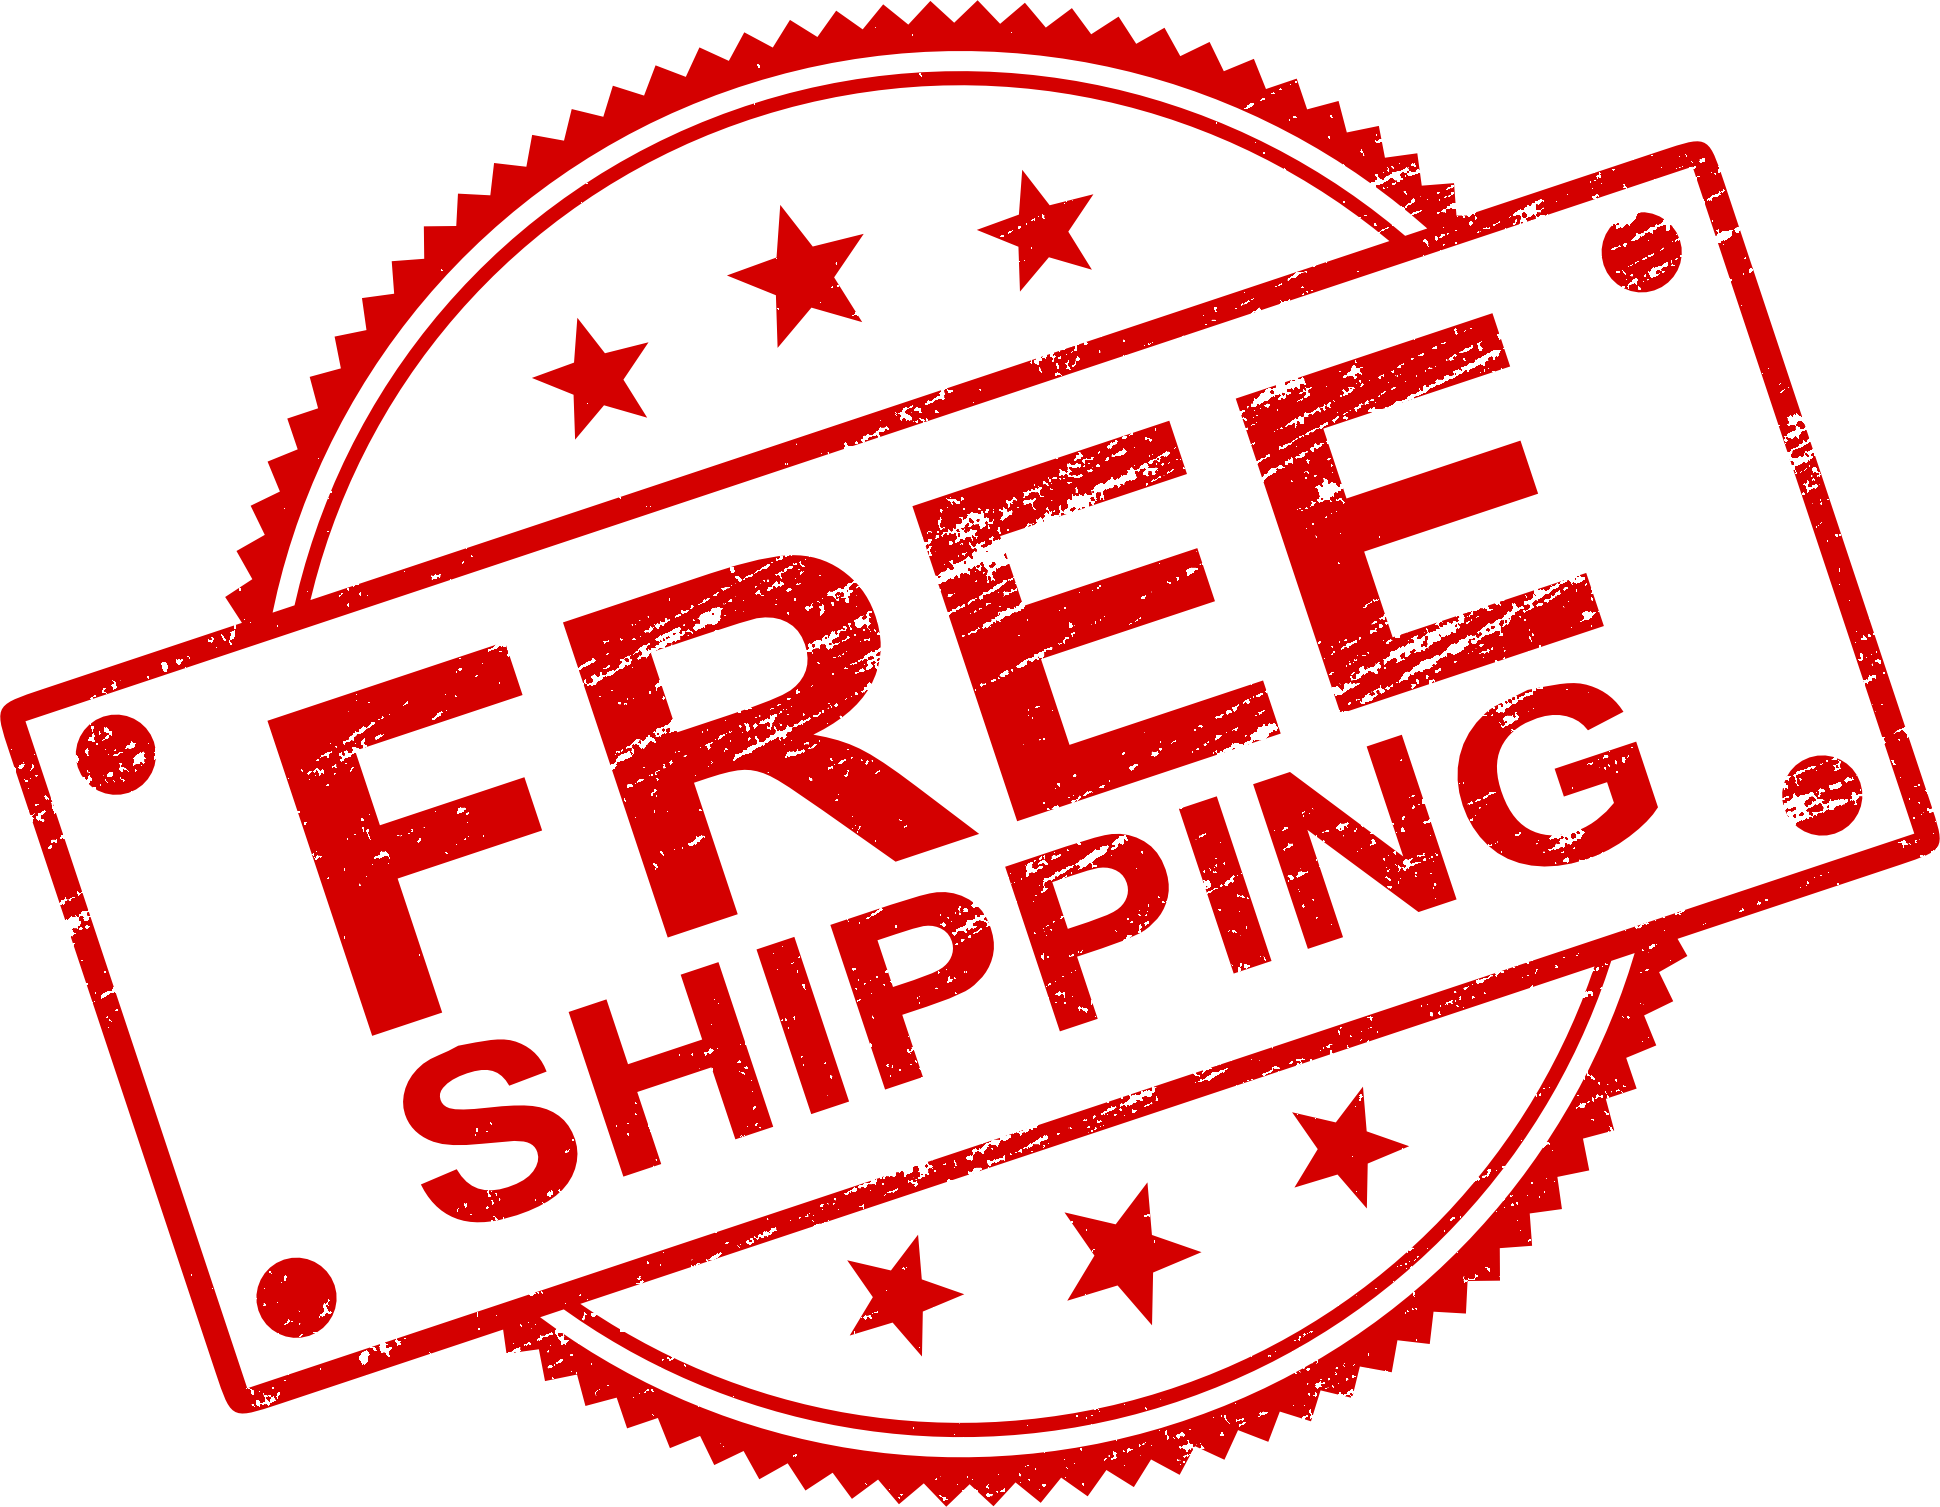 Free Shipping Free Download P